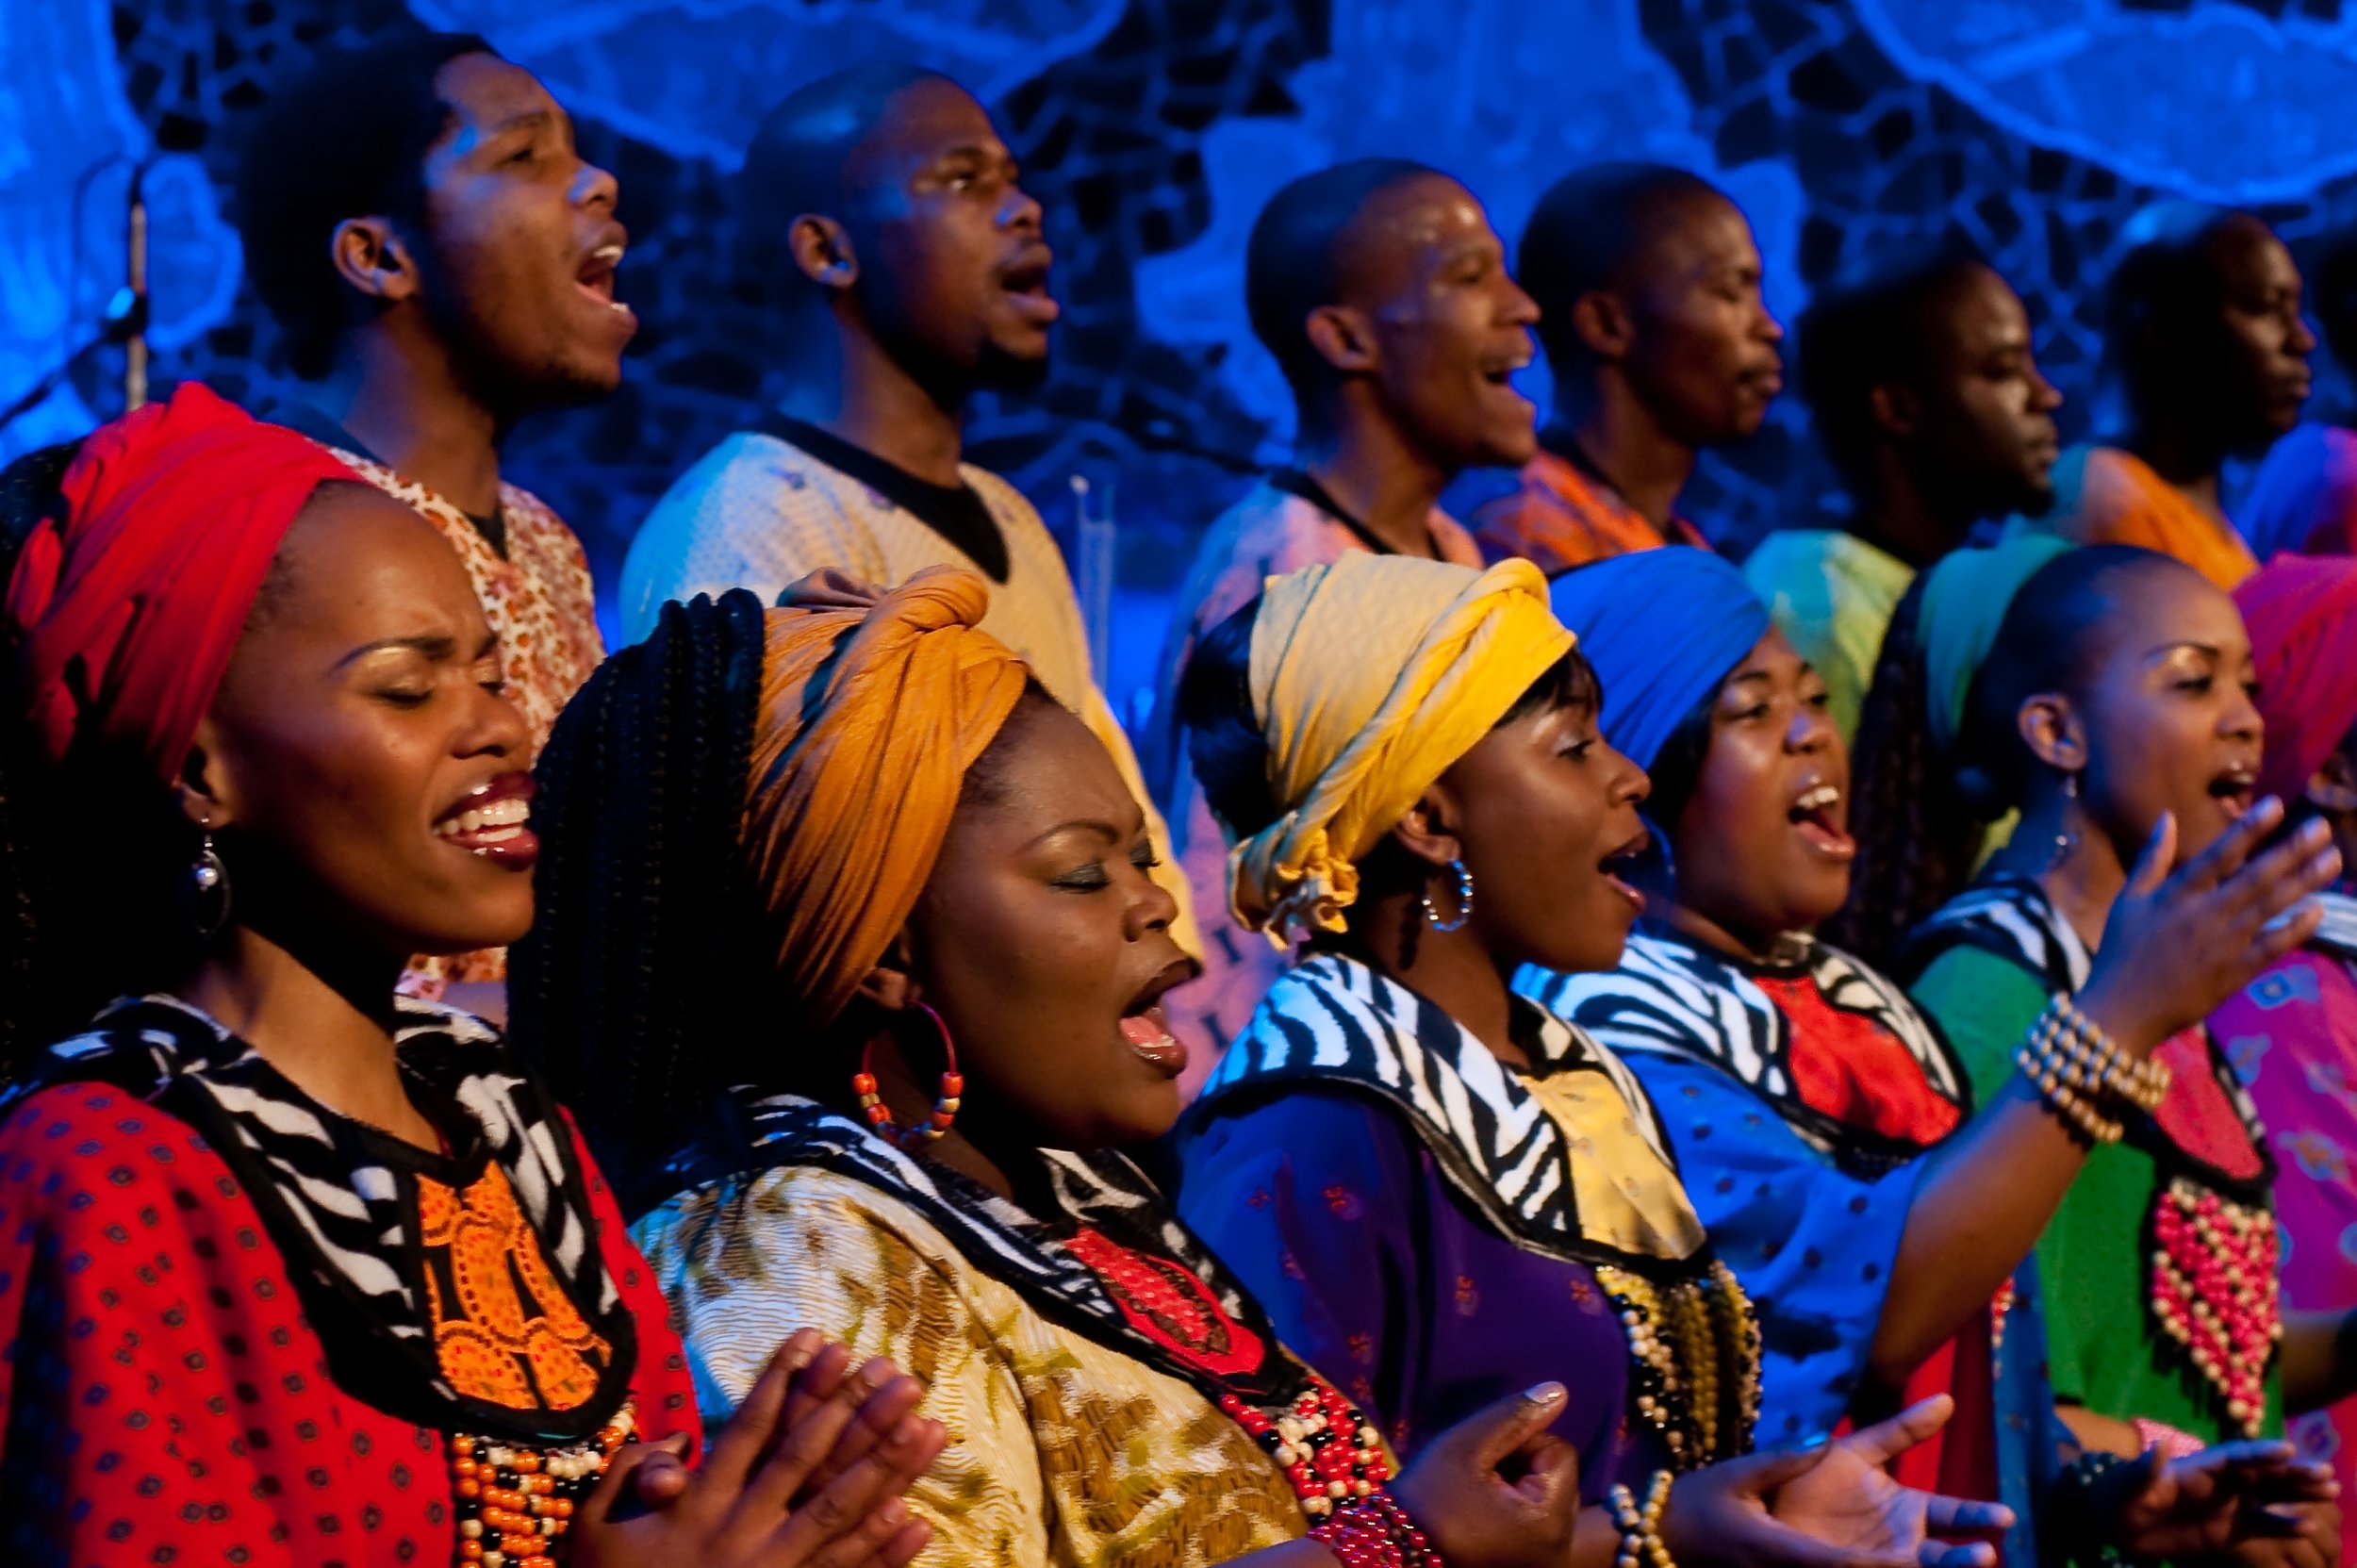 soweto golspel choir.jpg